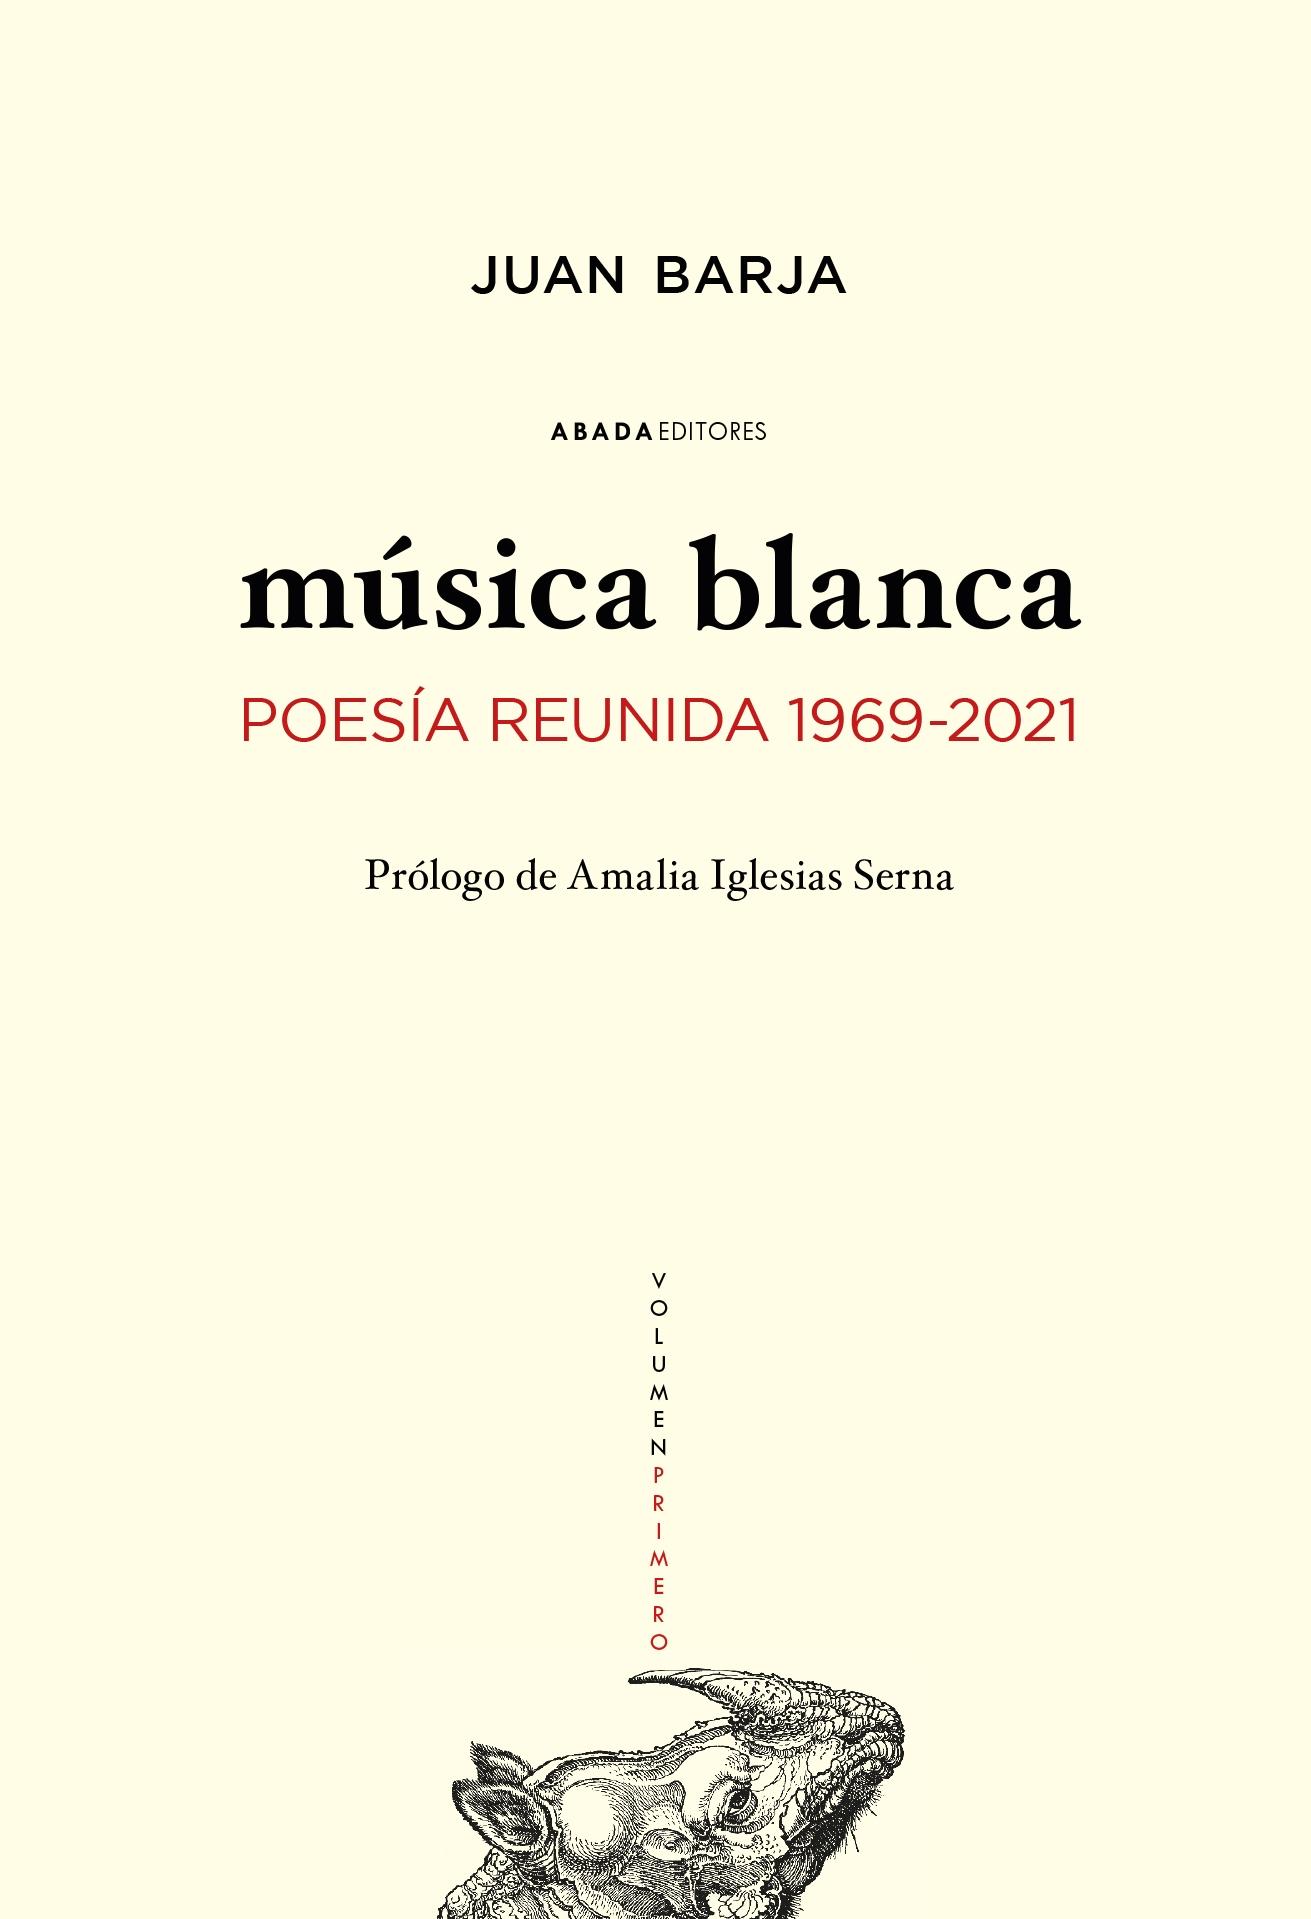 MUSICA BLANCA. POESIA REUNIDA 1969-2021 (2 VOLS.)